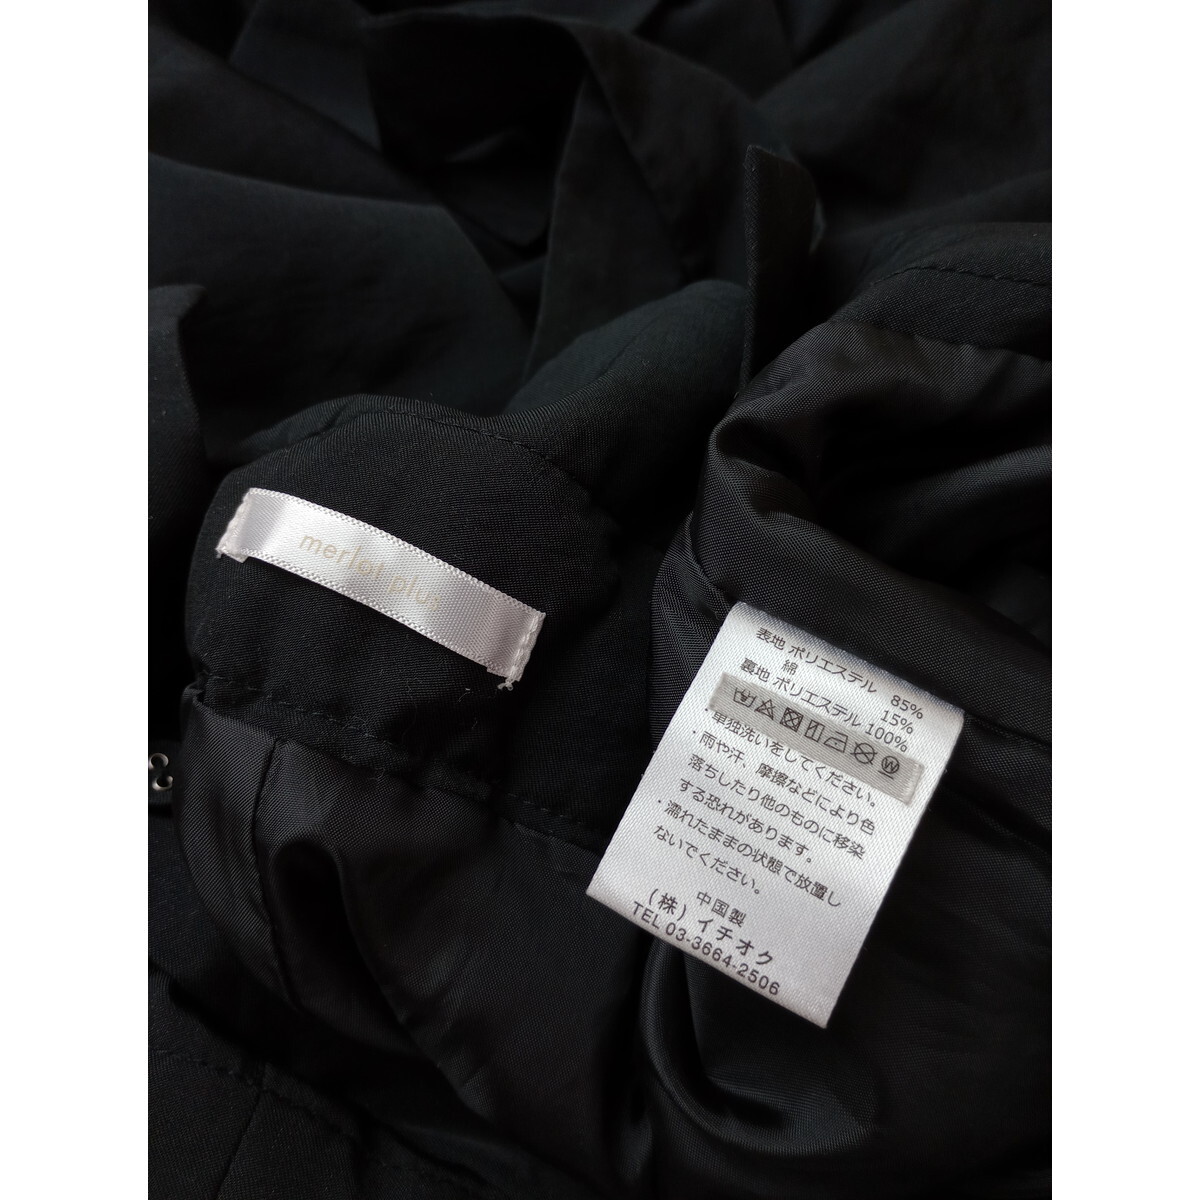 merlot plusmeru rope ryus[......... woman ..!] cotton cotton . ska LAP overall pants black black (1S+8625)